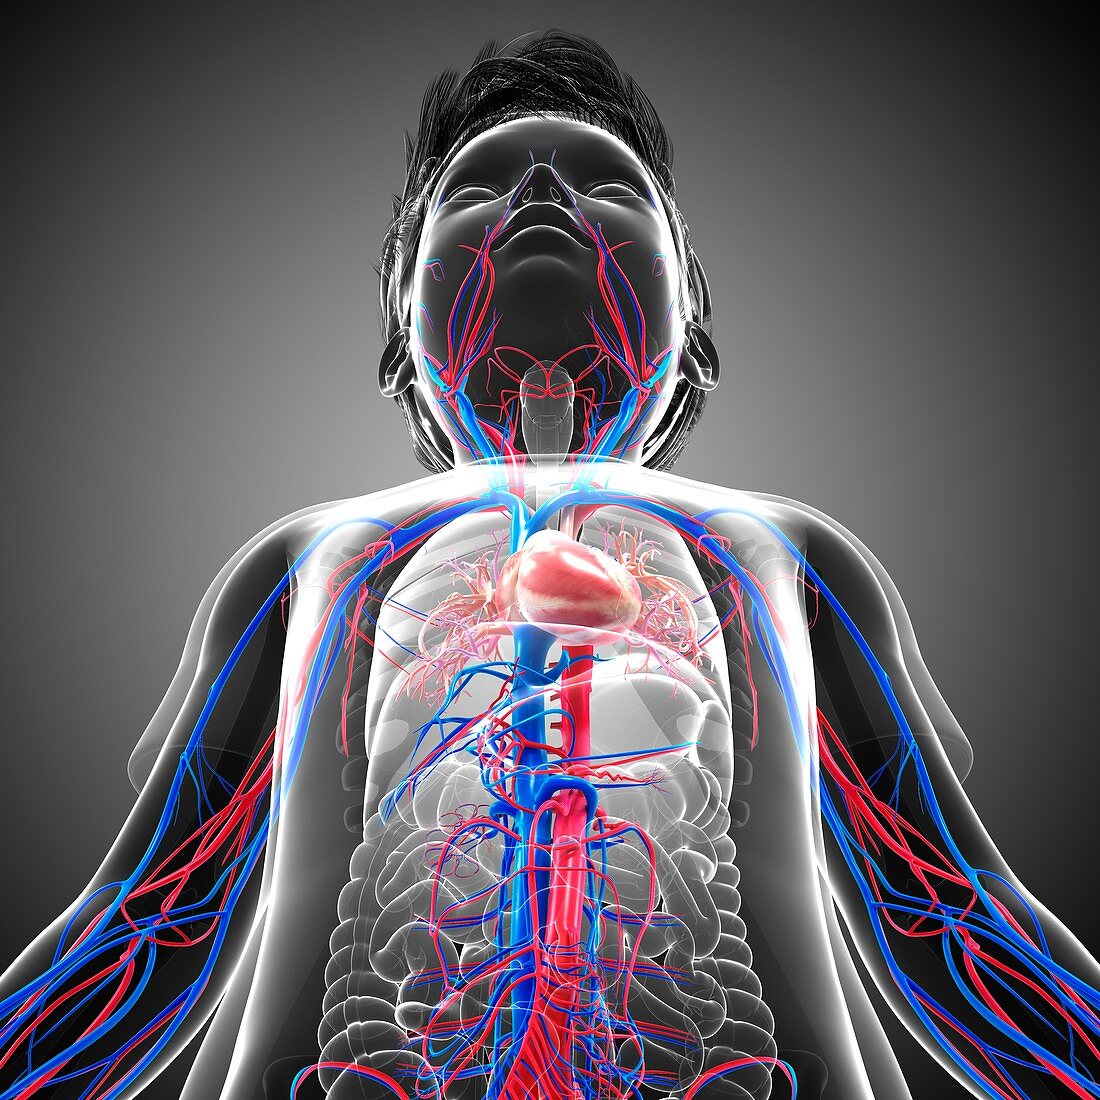 Child's circulatory system,illustration